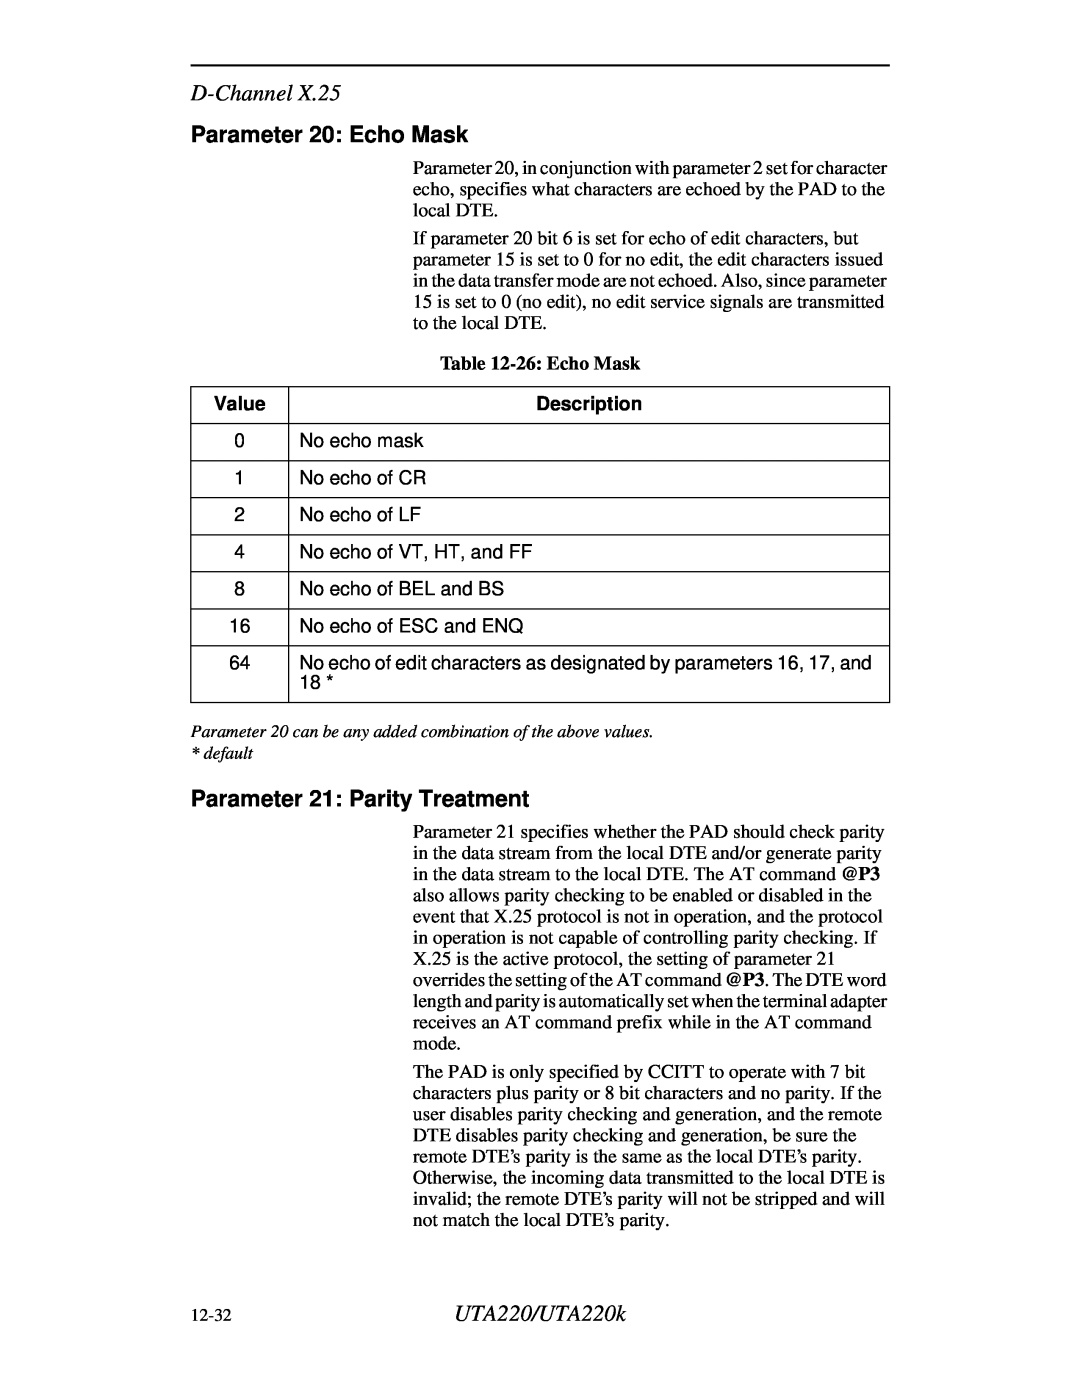 Northern UTA220/UTA220k manual Parameter 20 Echo Mask, Parameter 21 Parity Treatment, D-Channel, Value, Description 